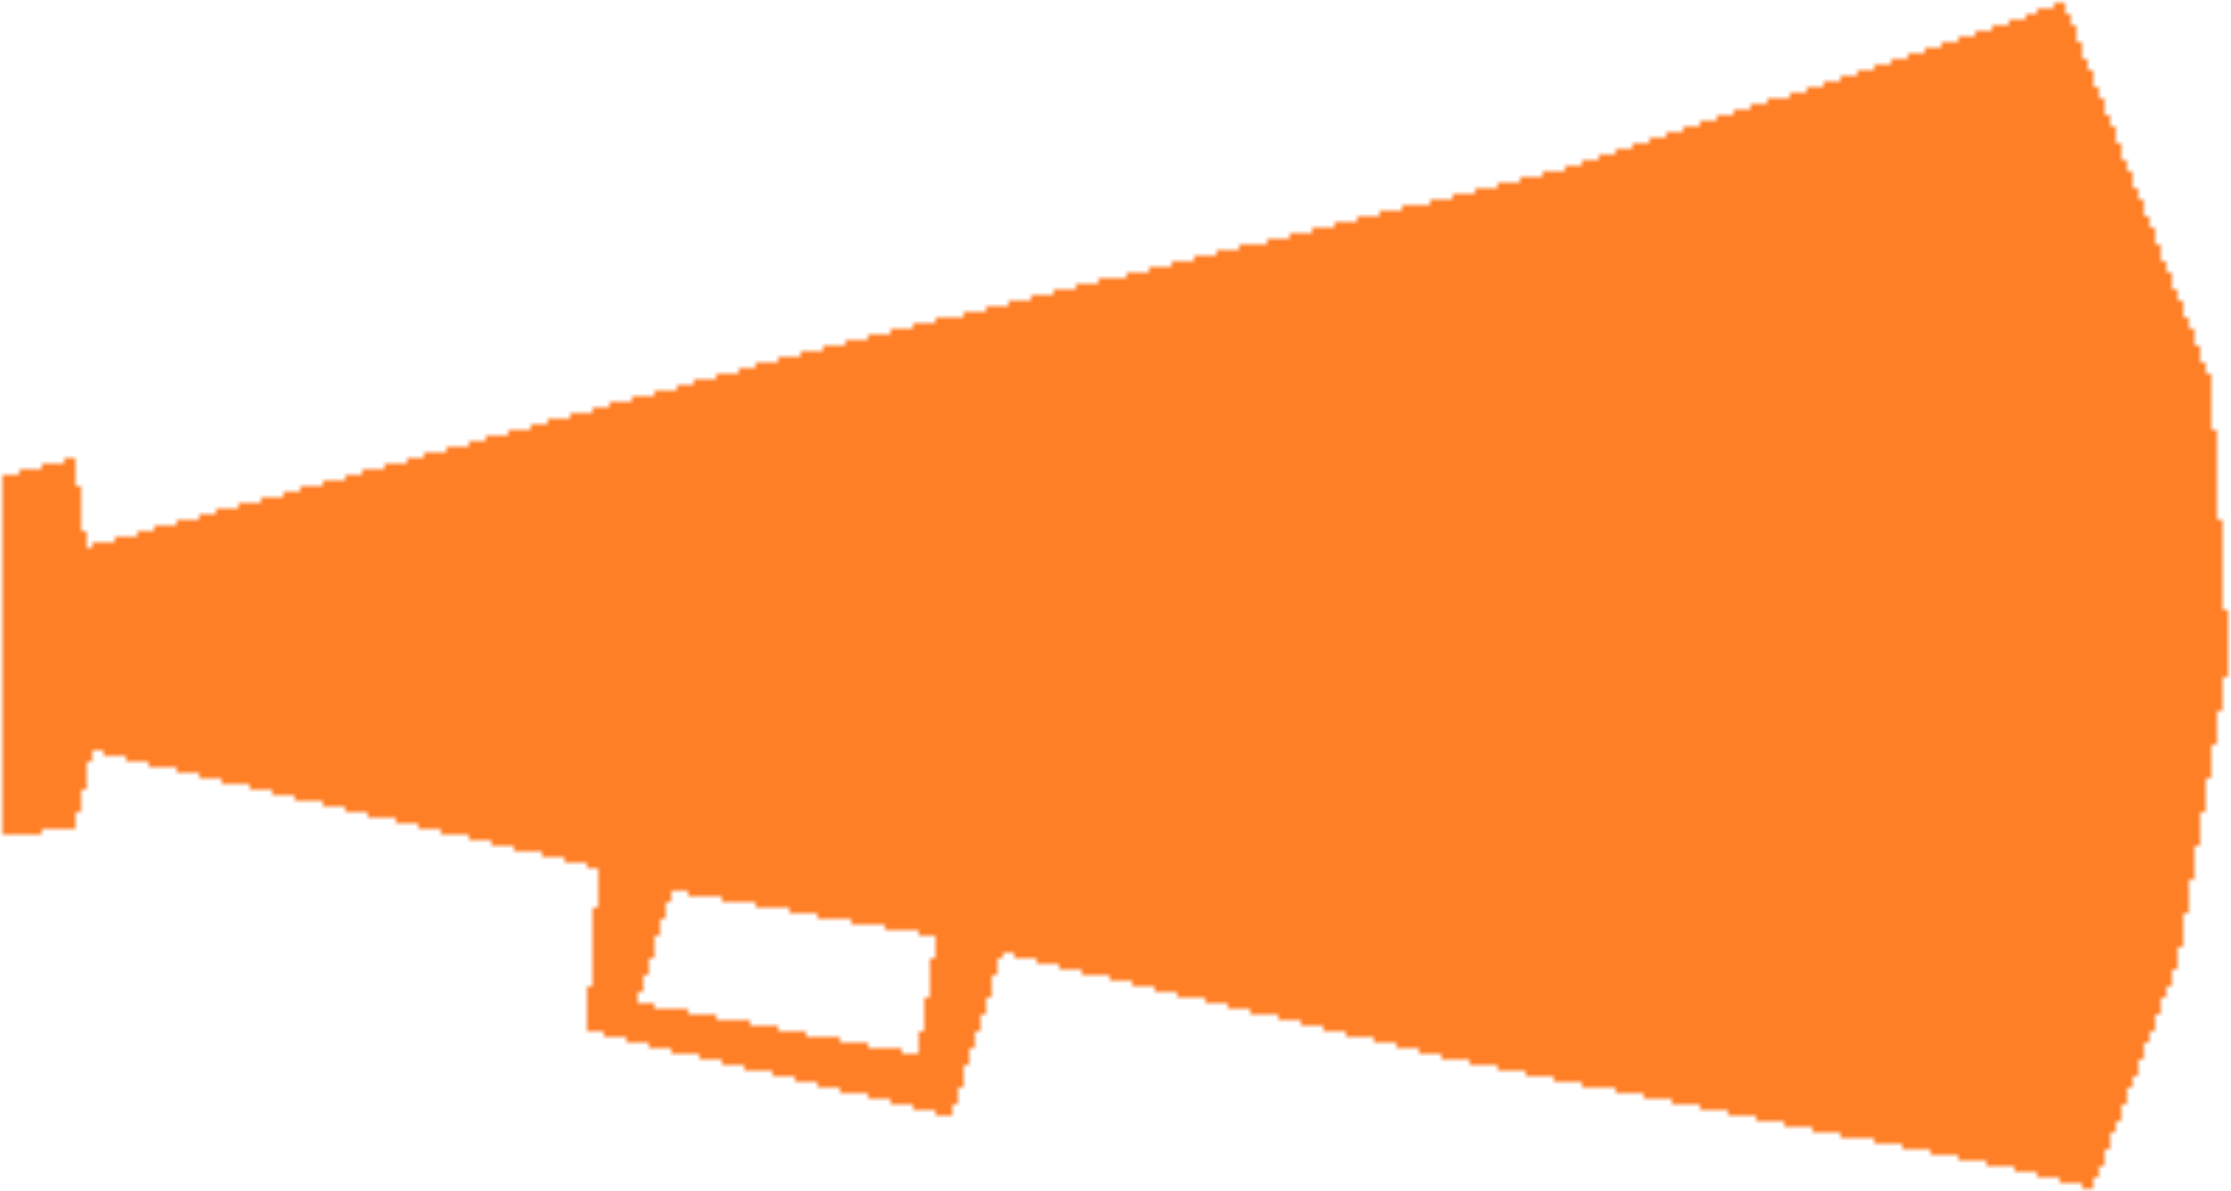 Big Image - Orange And Black Megaphone (2231x1191)